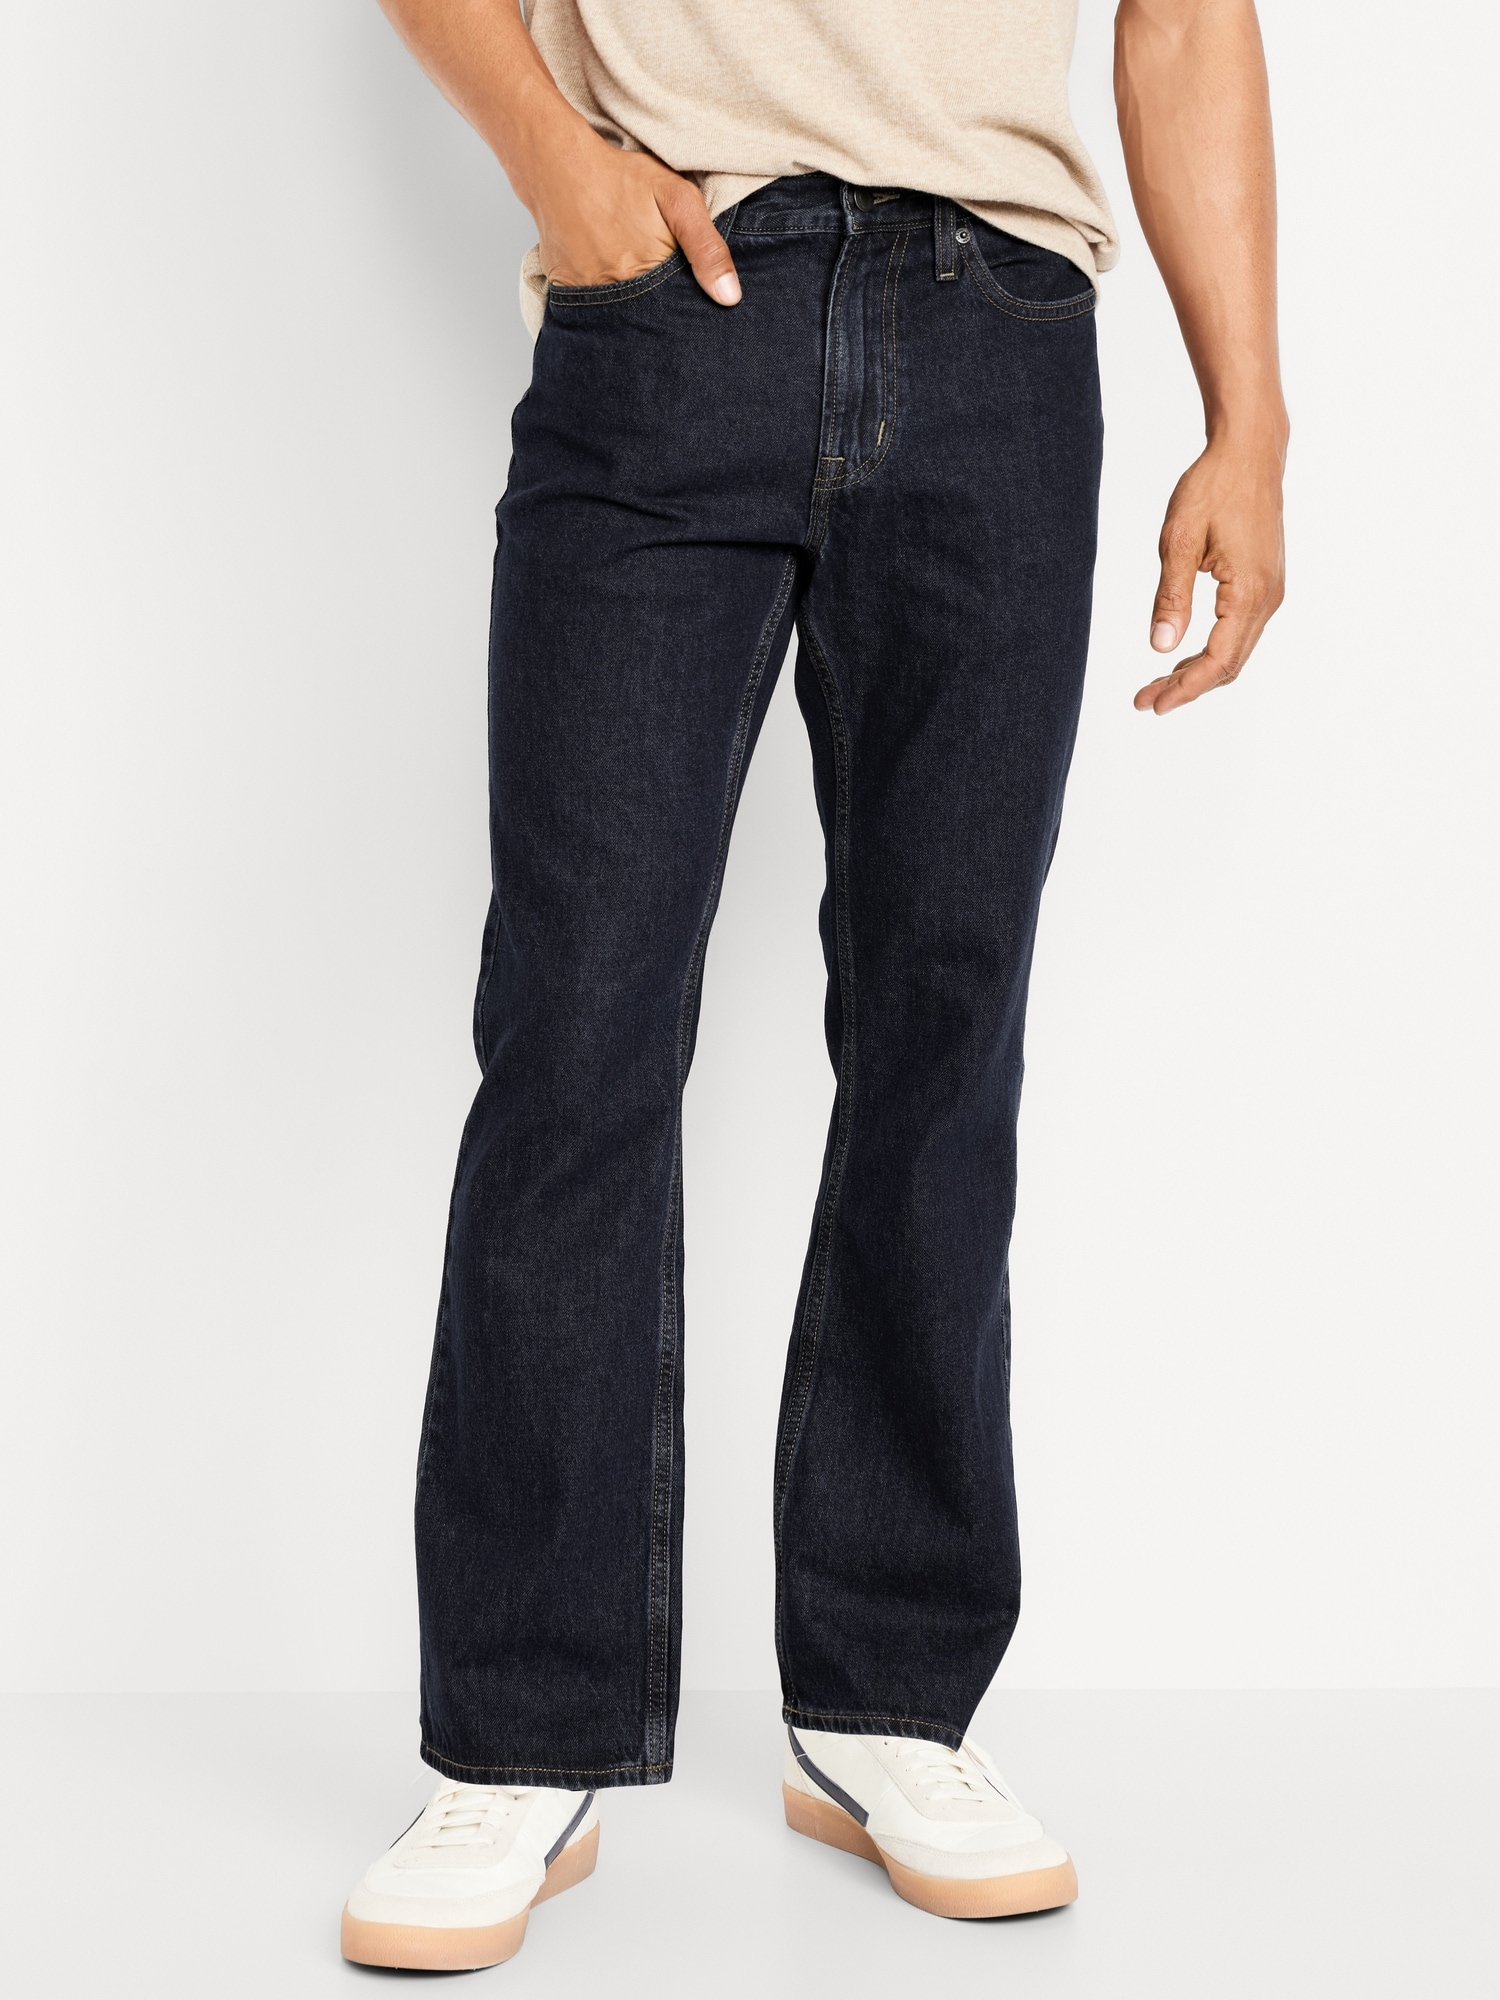 Levi's® 517 Stretch Bootcut Jeans